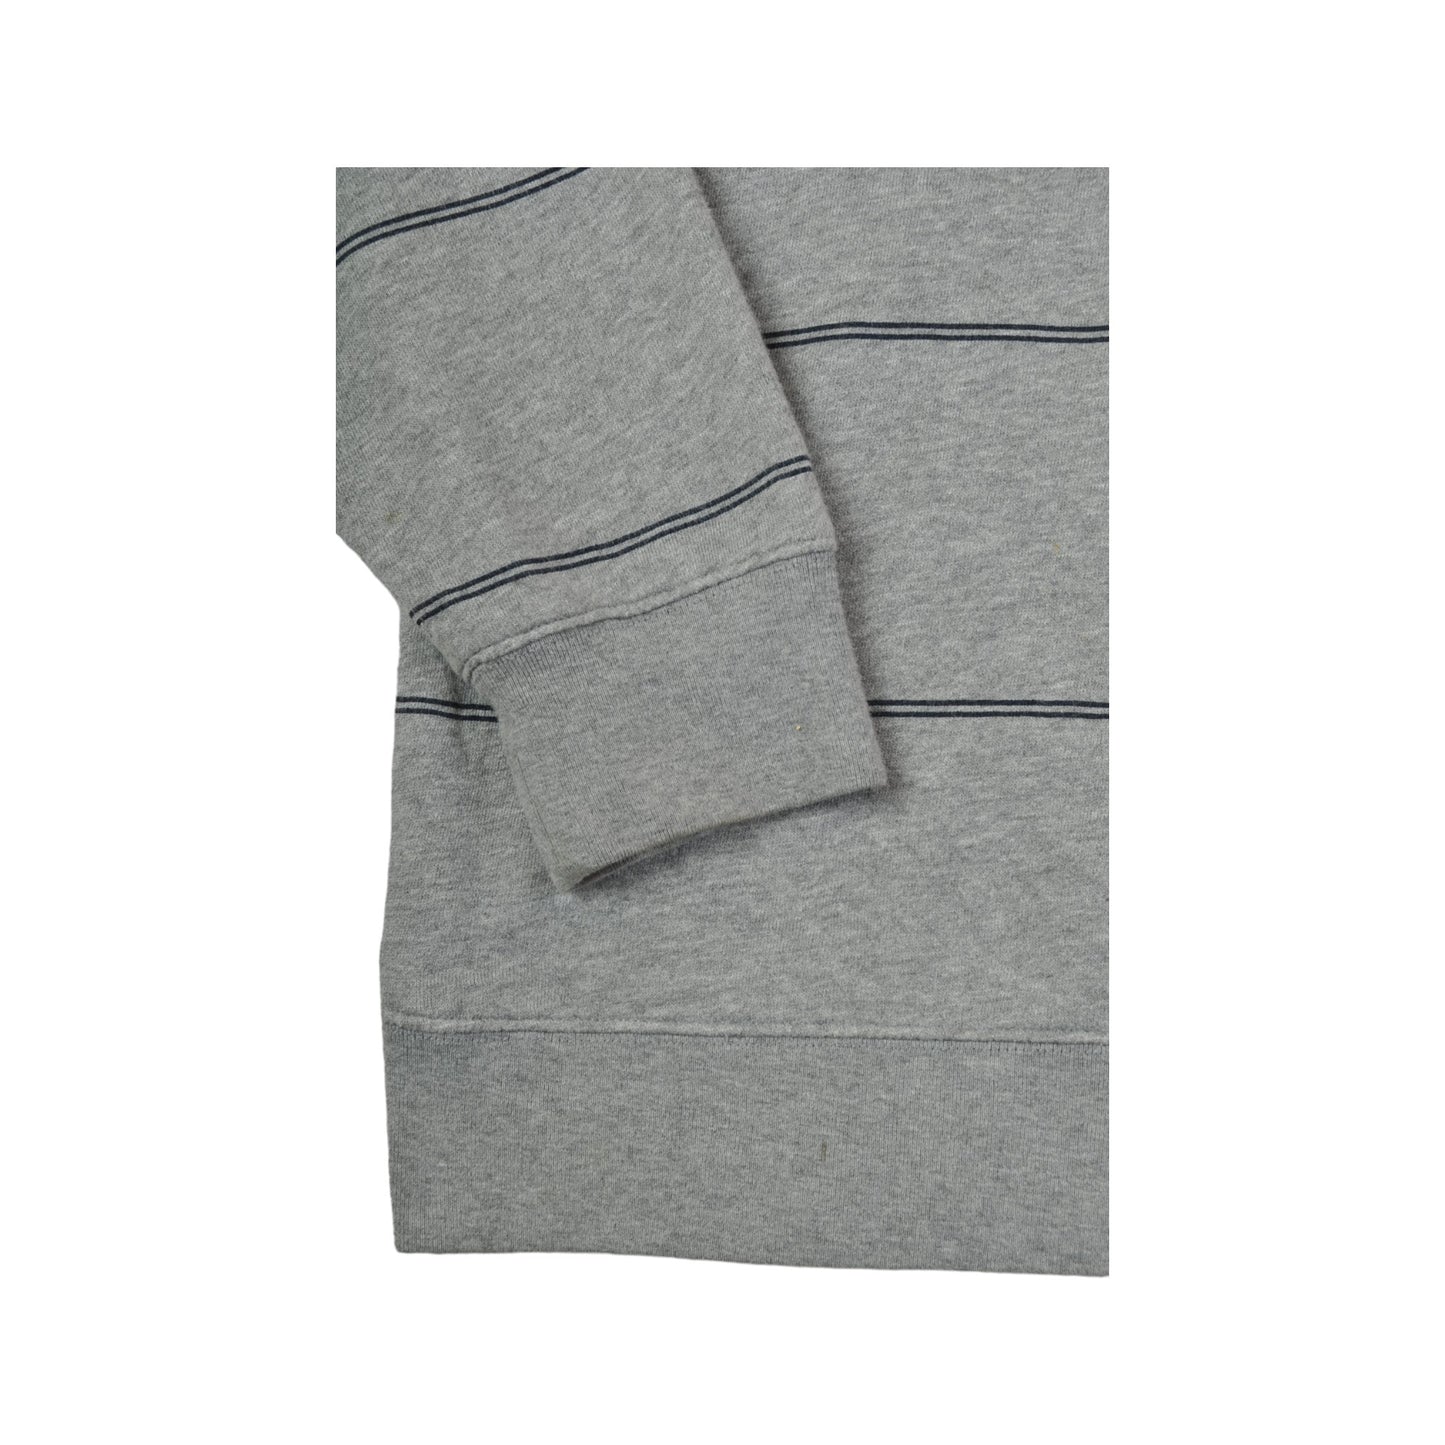 Vintage Nautica 1/4 Zip Sweatshirt Grey Large